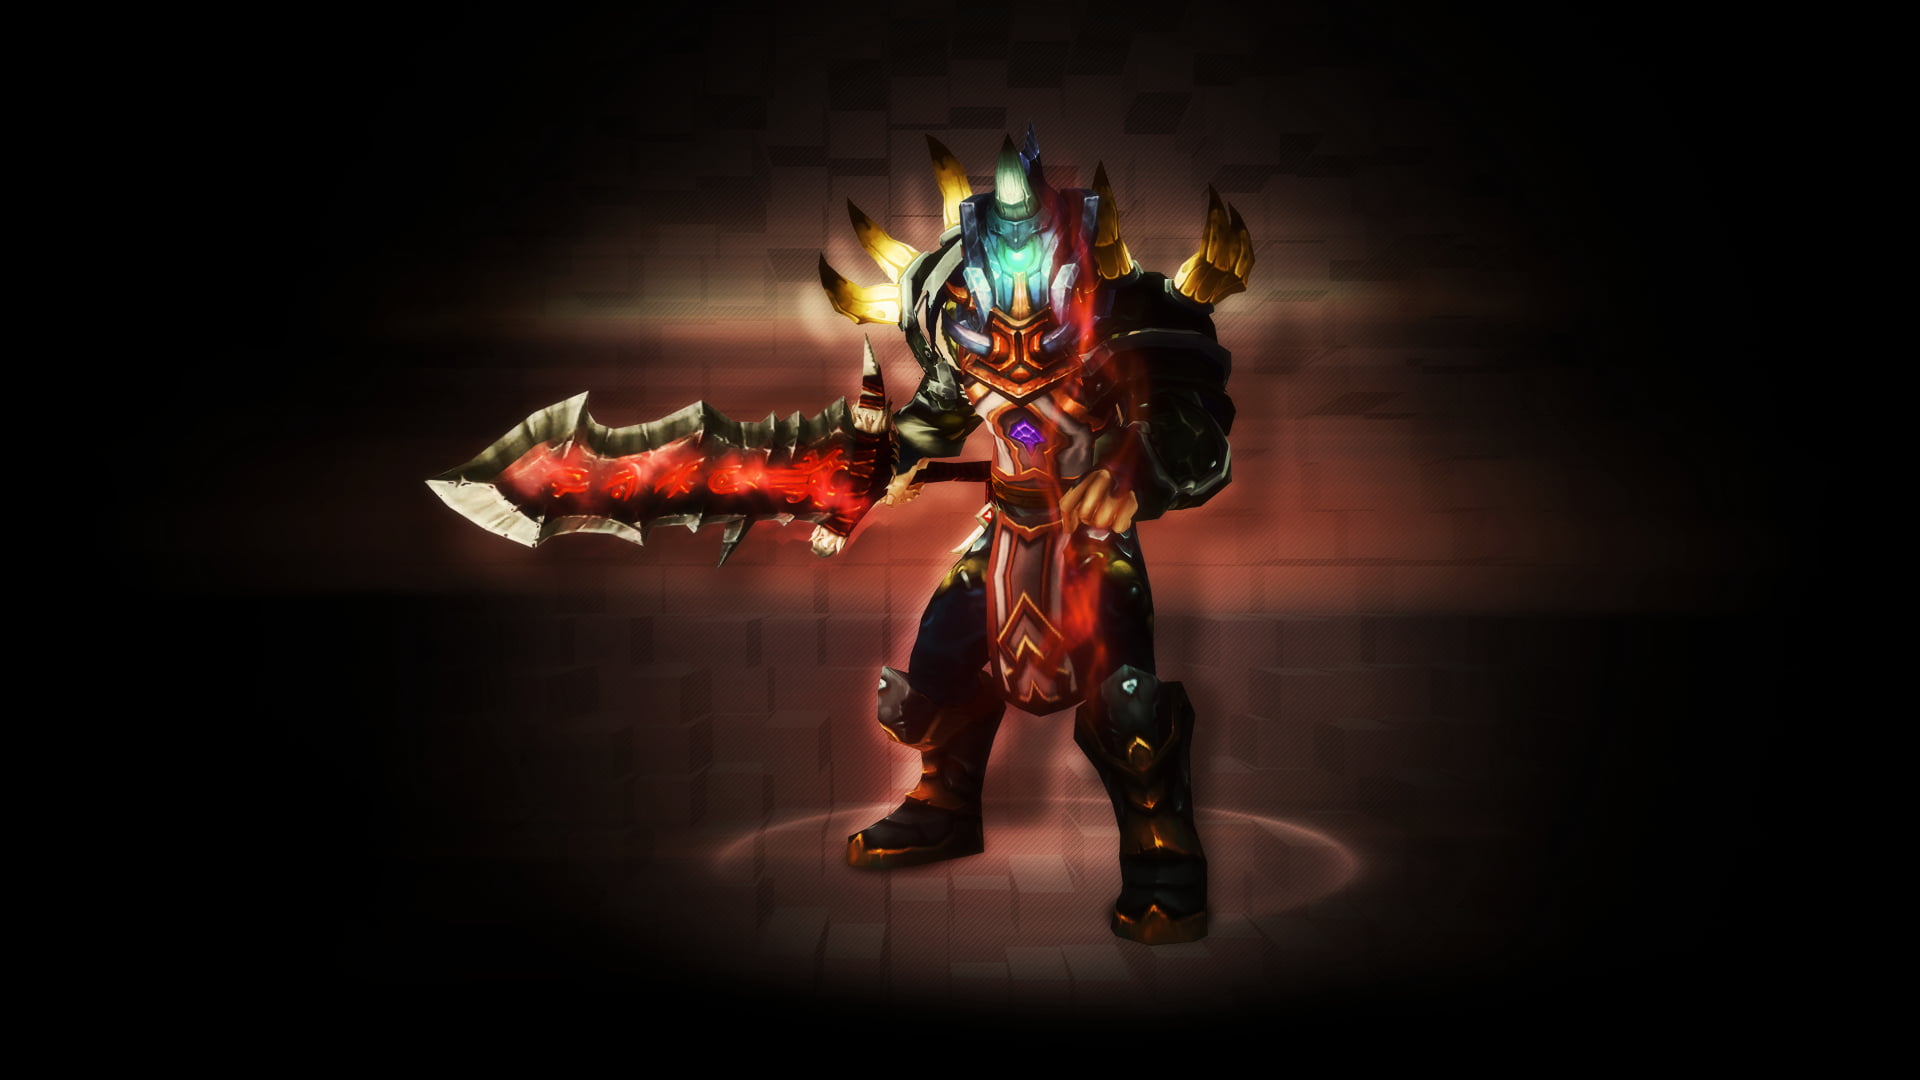 warrior holding sword digital wallpaper, World of Warcraft